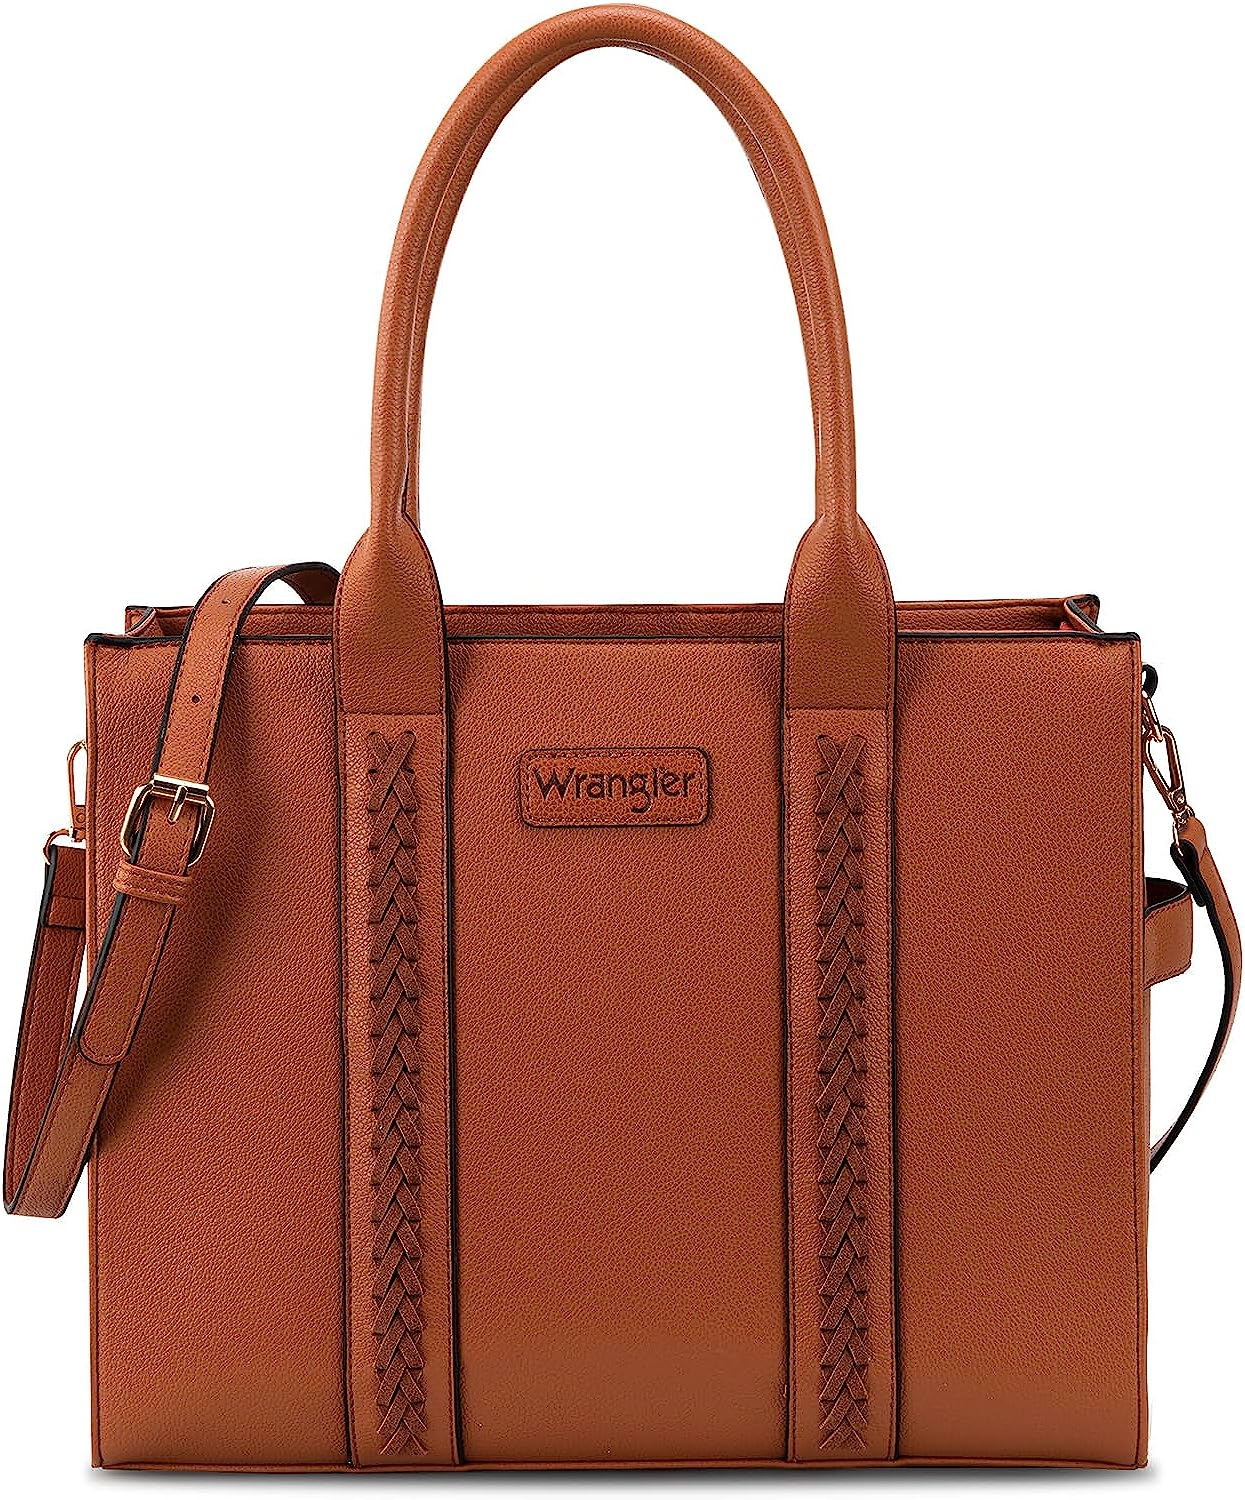 Wrangler Tote Bag for Women Zipper Shoulder Handbag - Cowgirl Wear